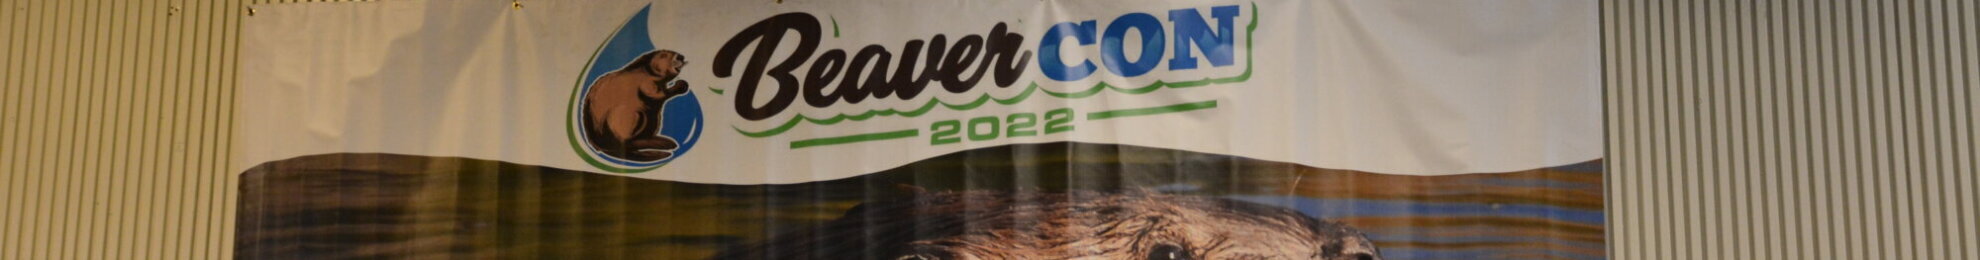 BeaverCON backgound banner